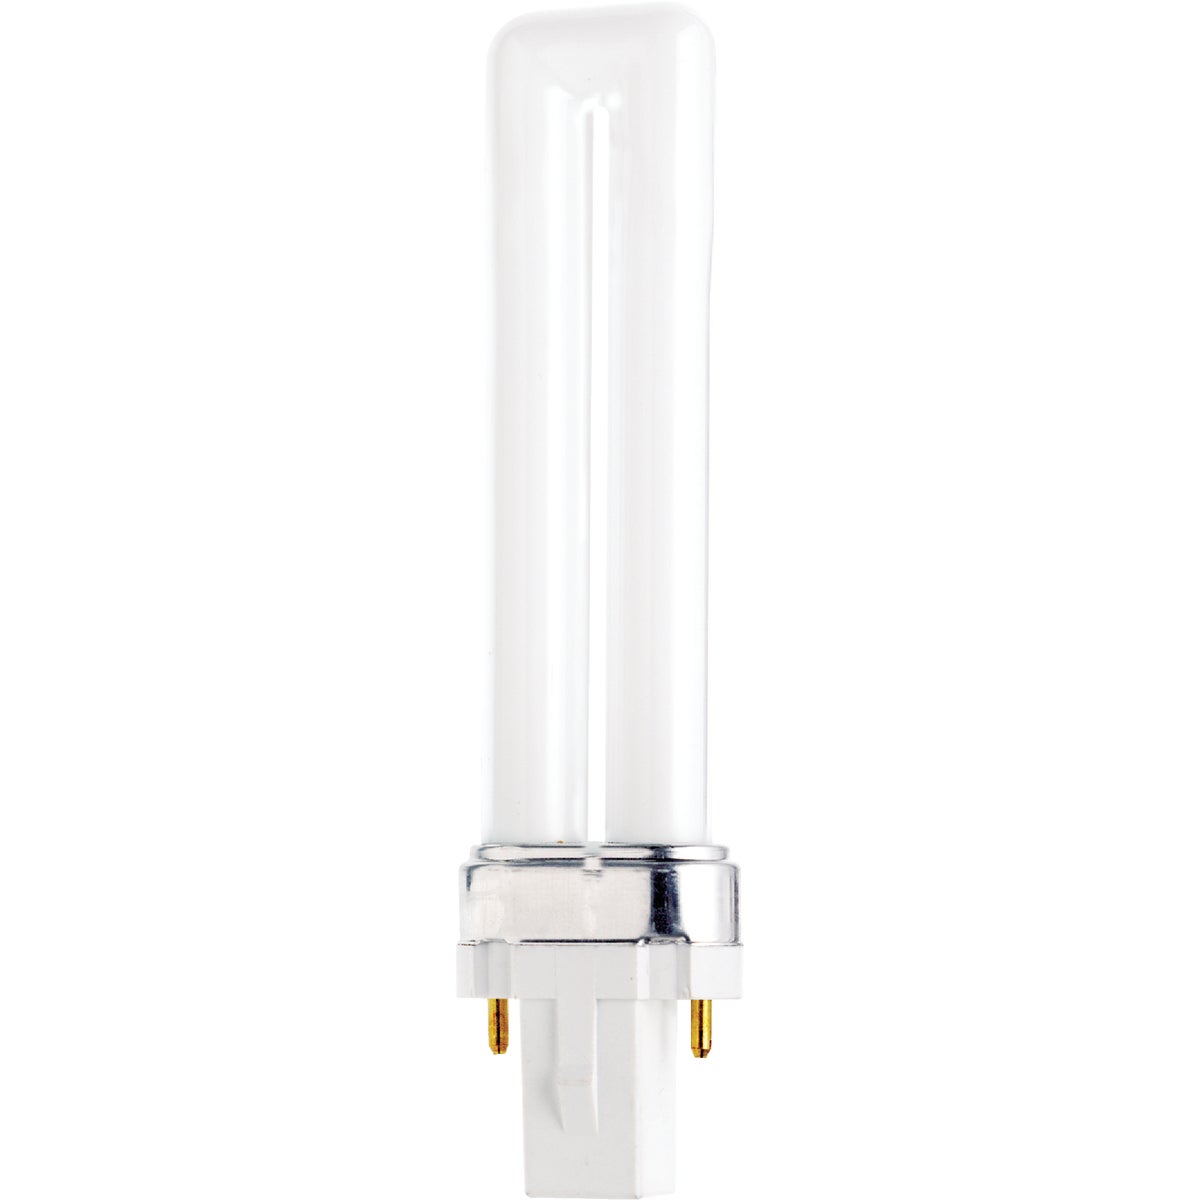 Satco 25W Equivalent Warm White G23 Base T4 CFL Light Bulb